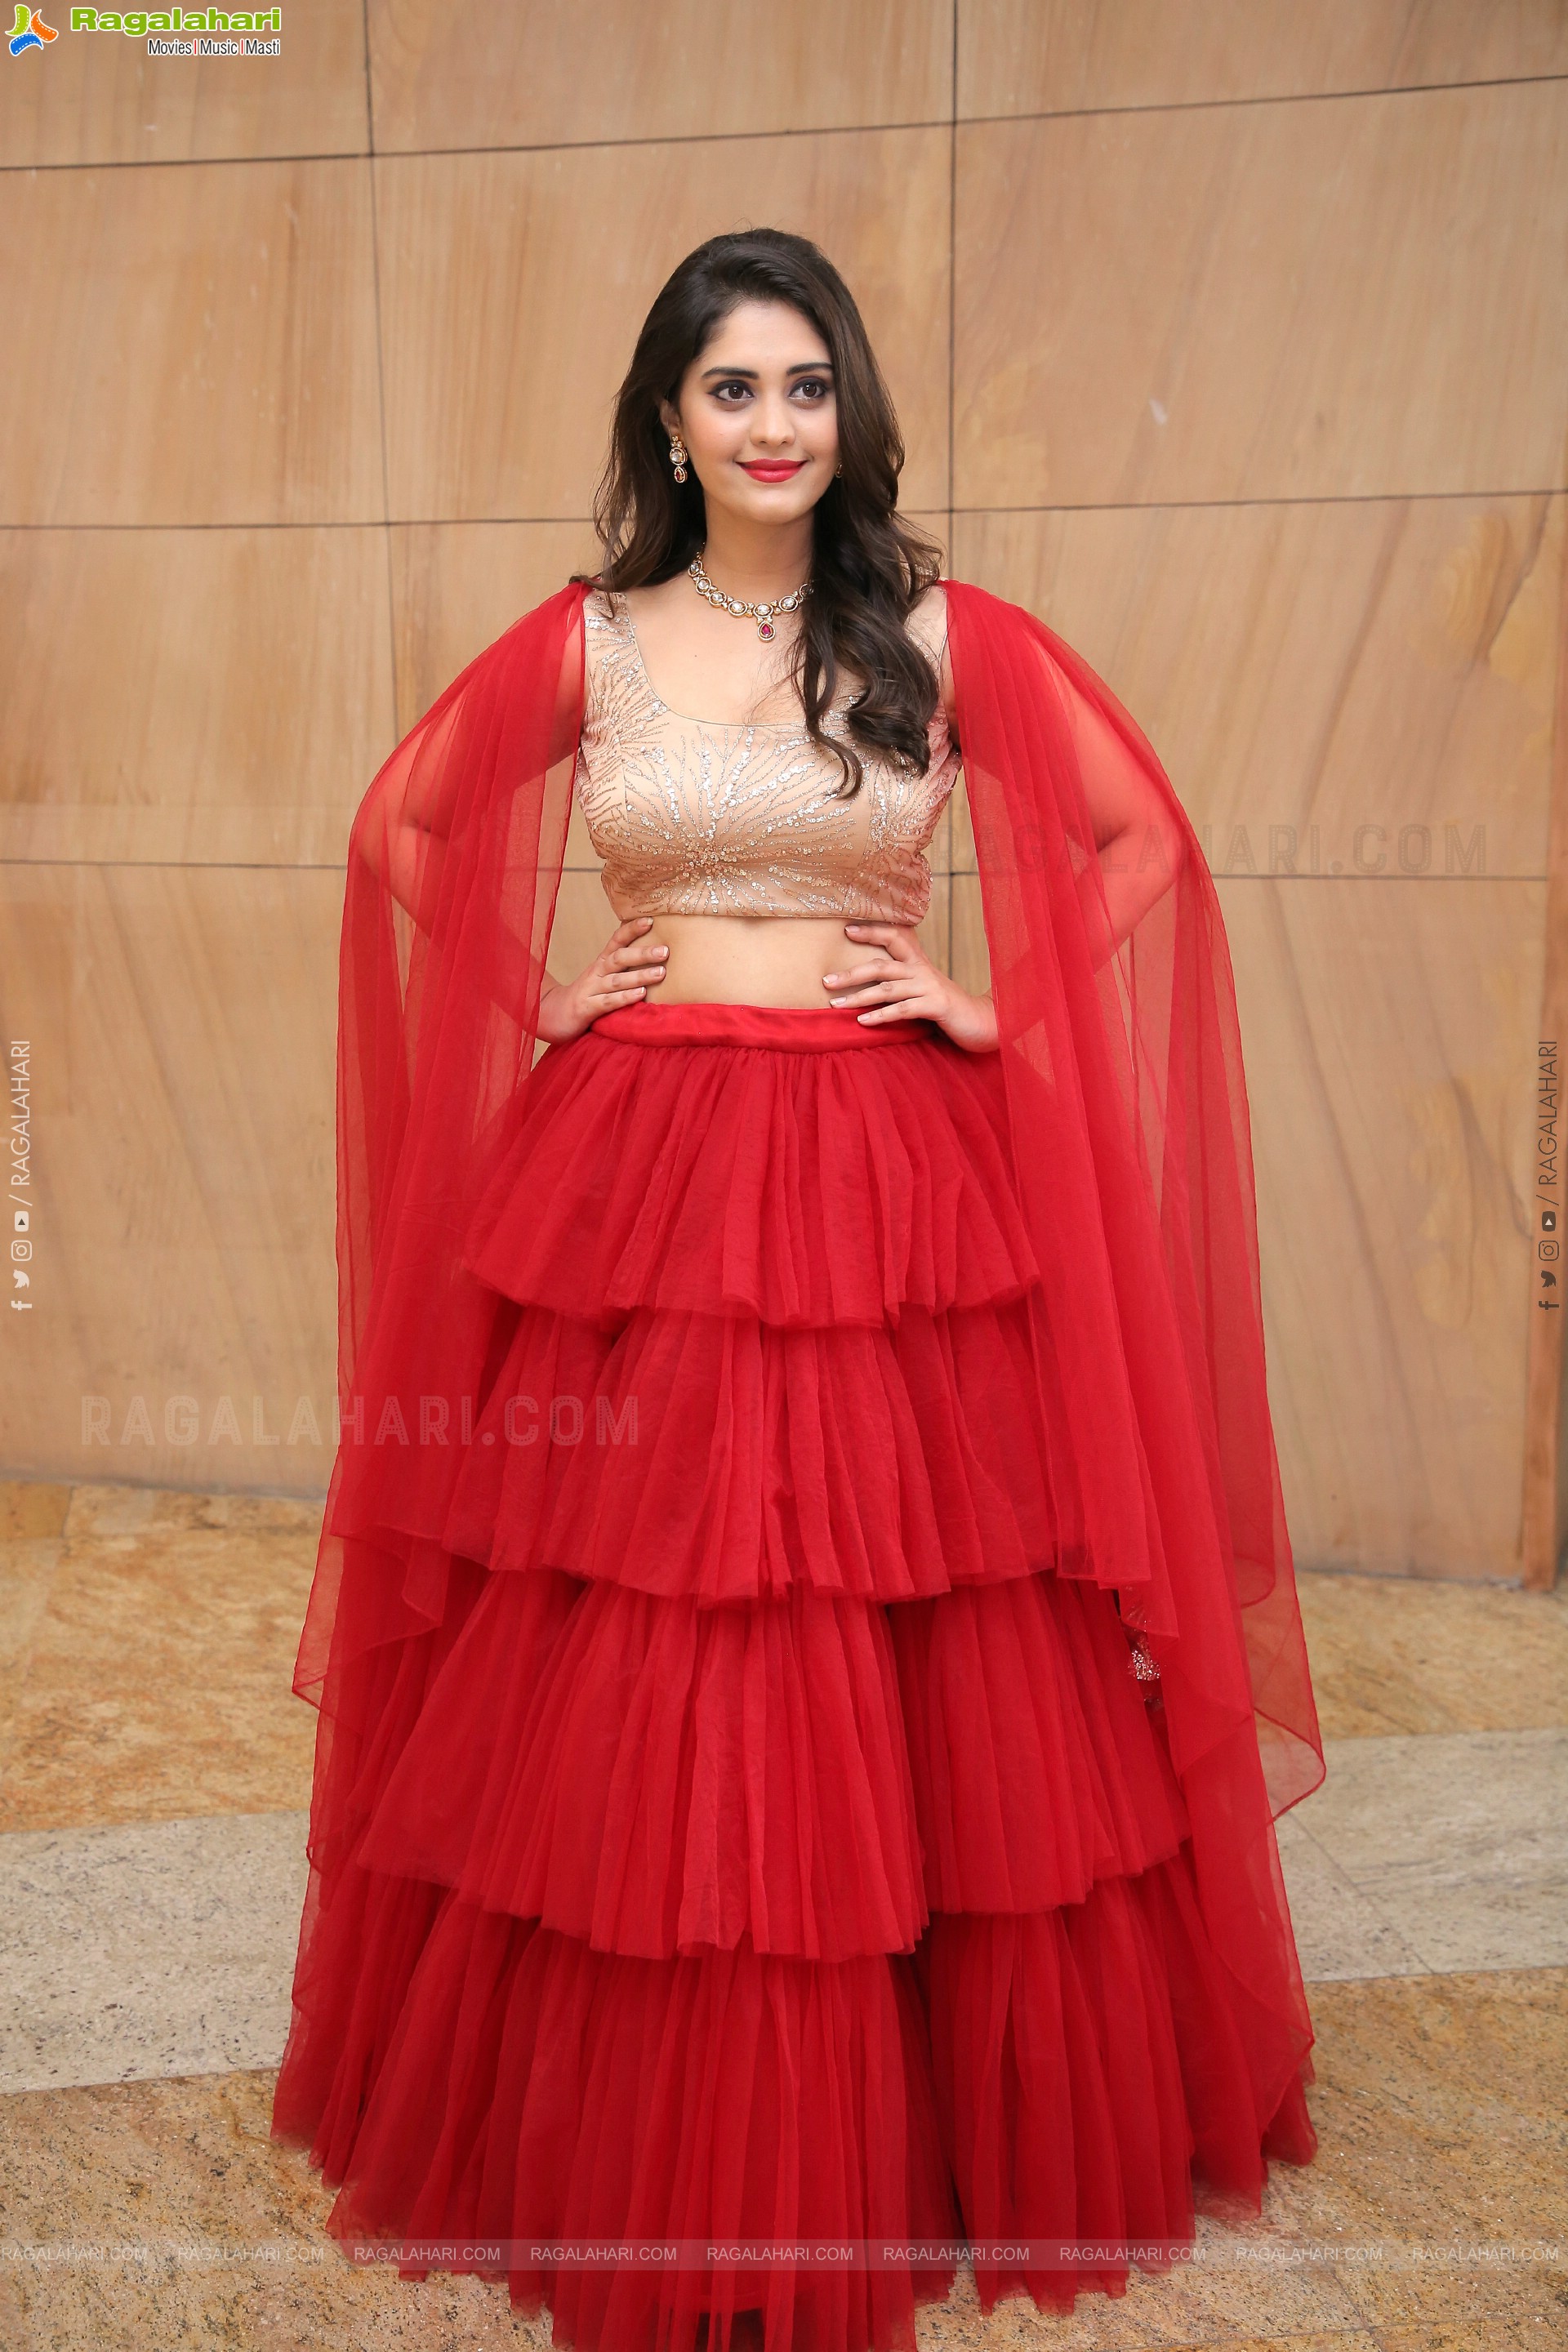 Surbhi Puranik in Red Designer Ruffle Lehenga Choli, HD Photo Gallery